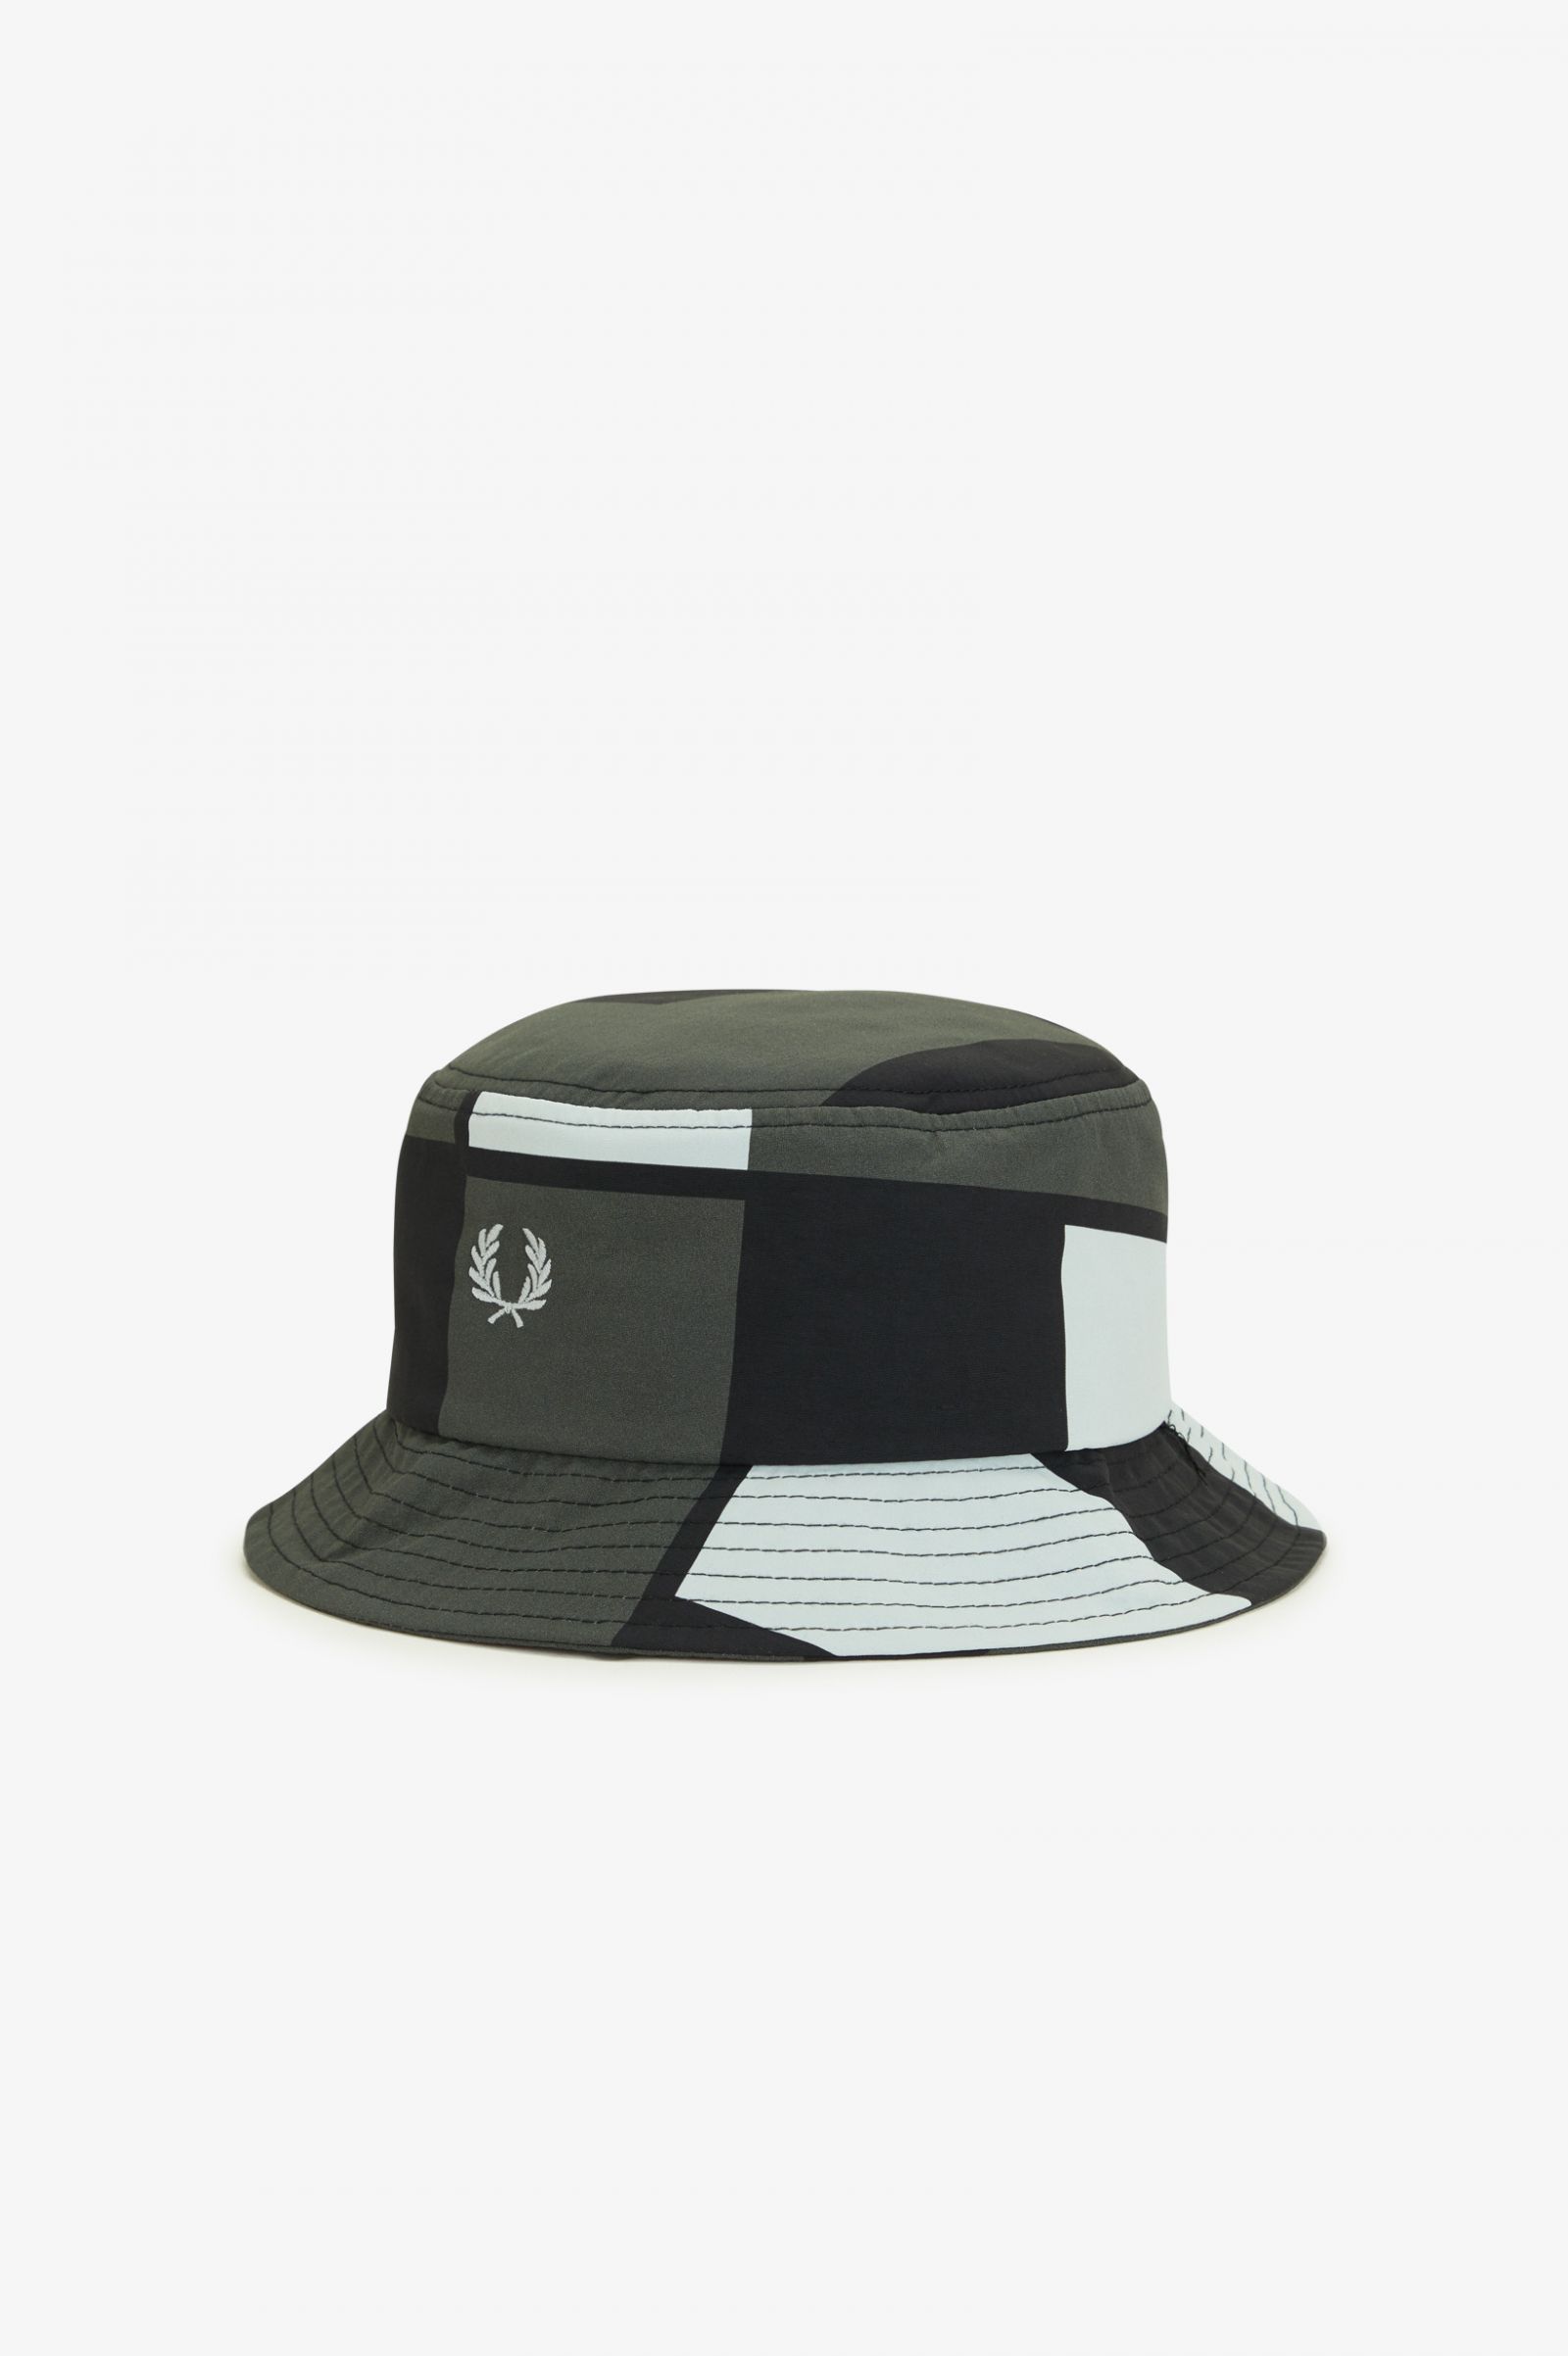 Pixel Print Bucket Hat - Light Ice / Field Green / Black